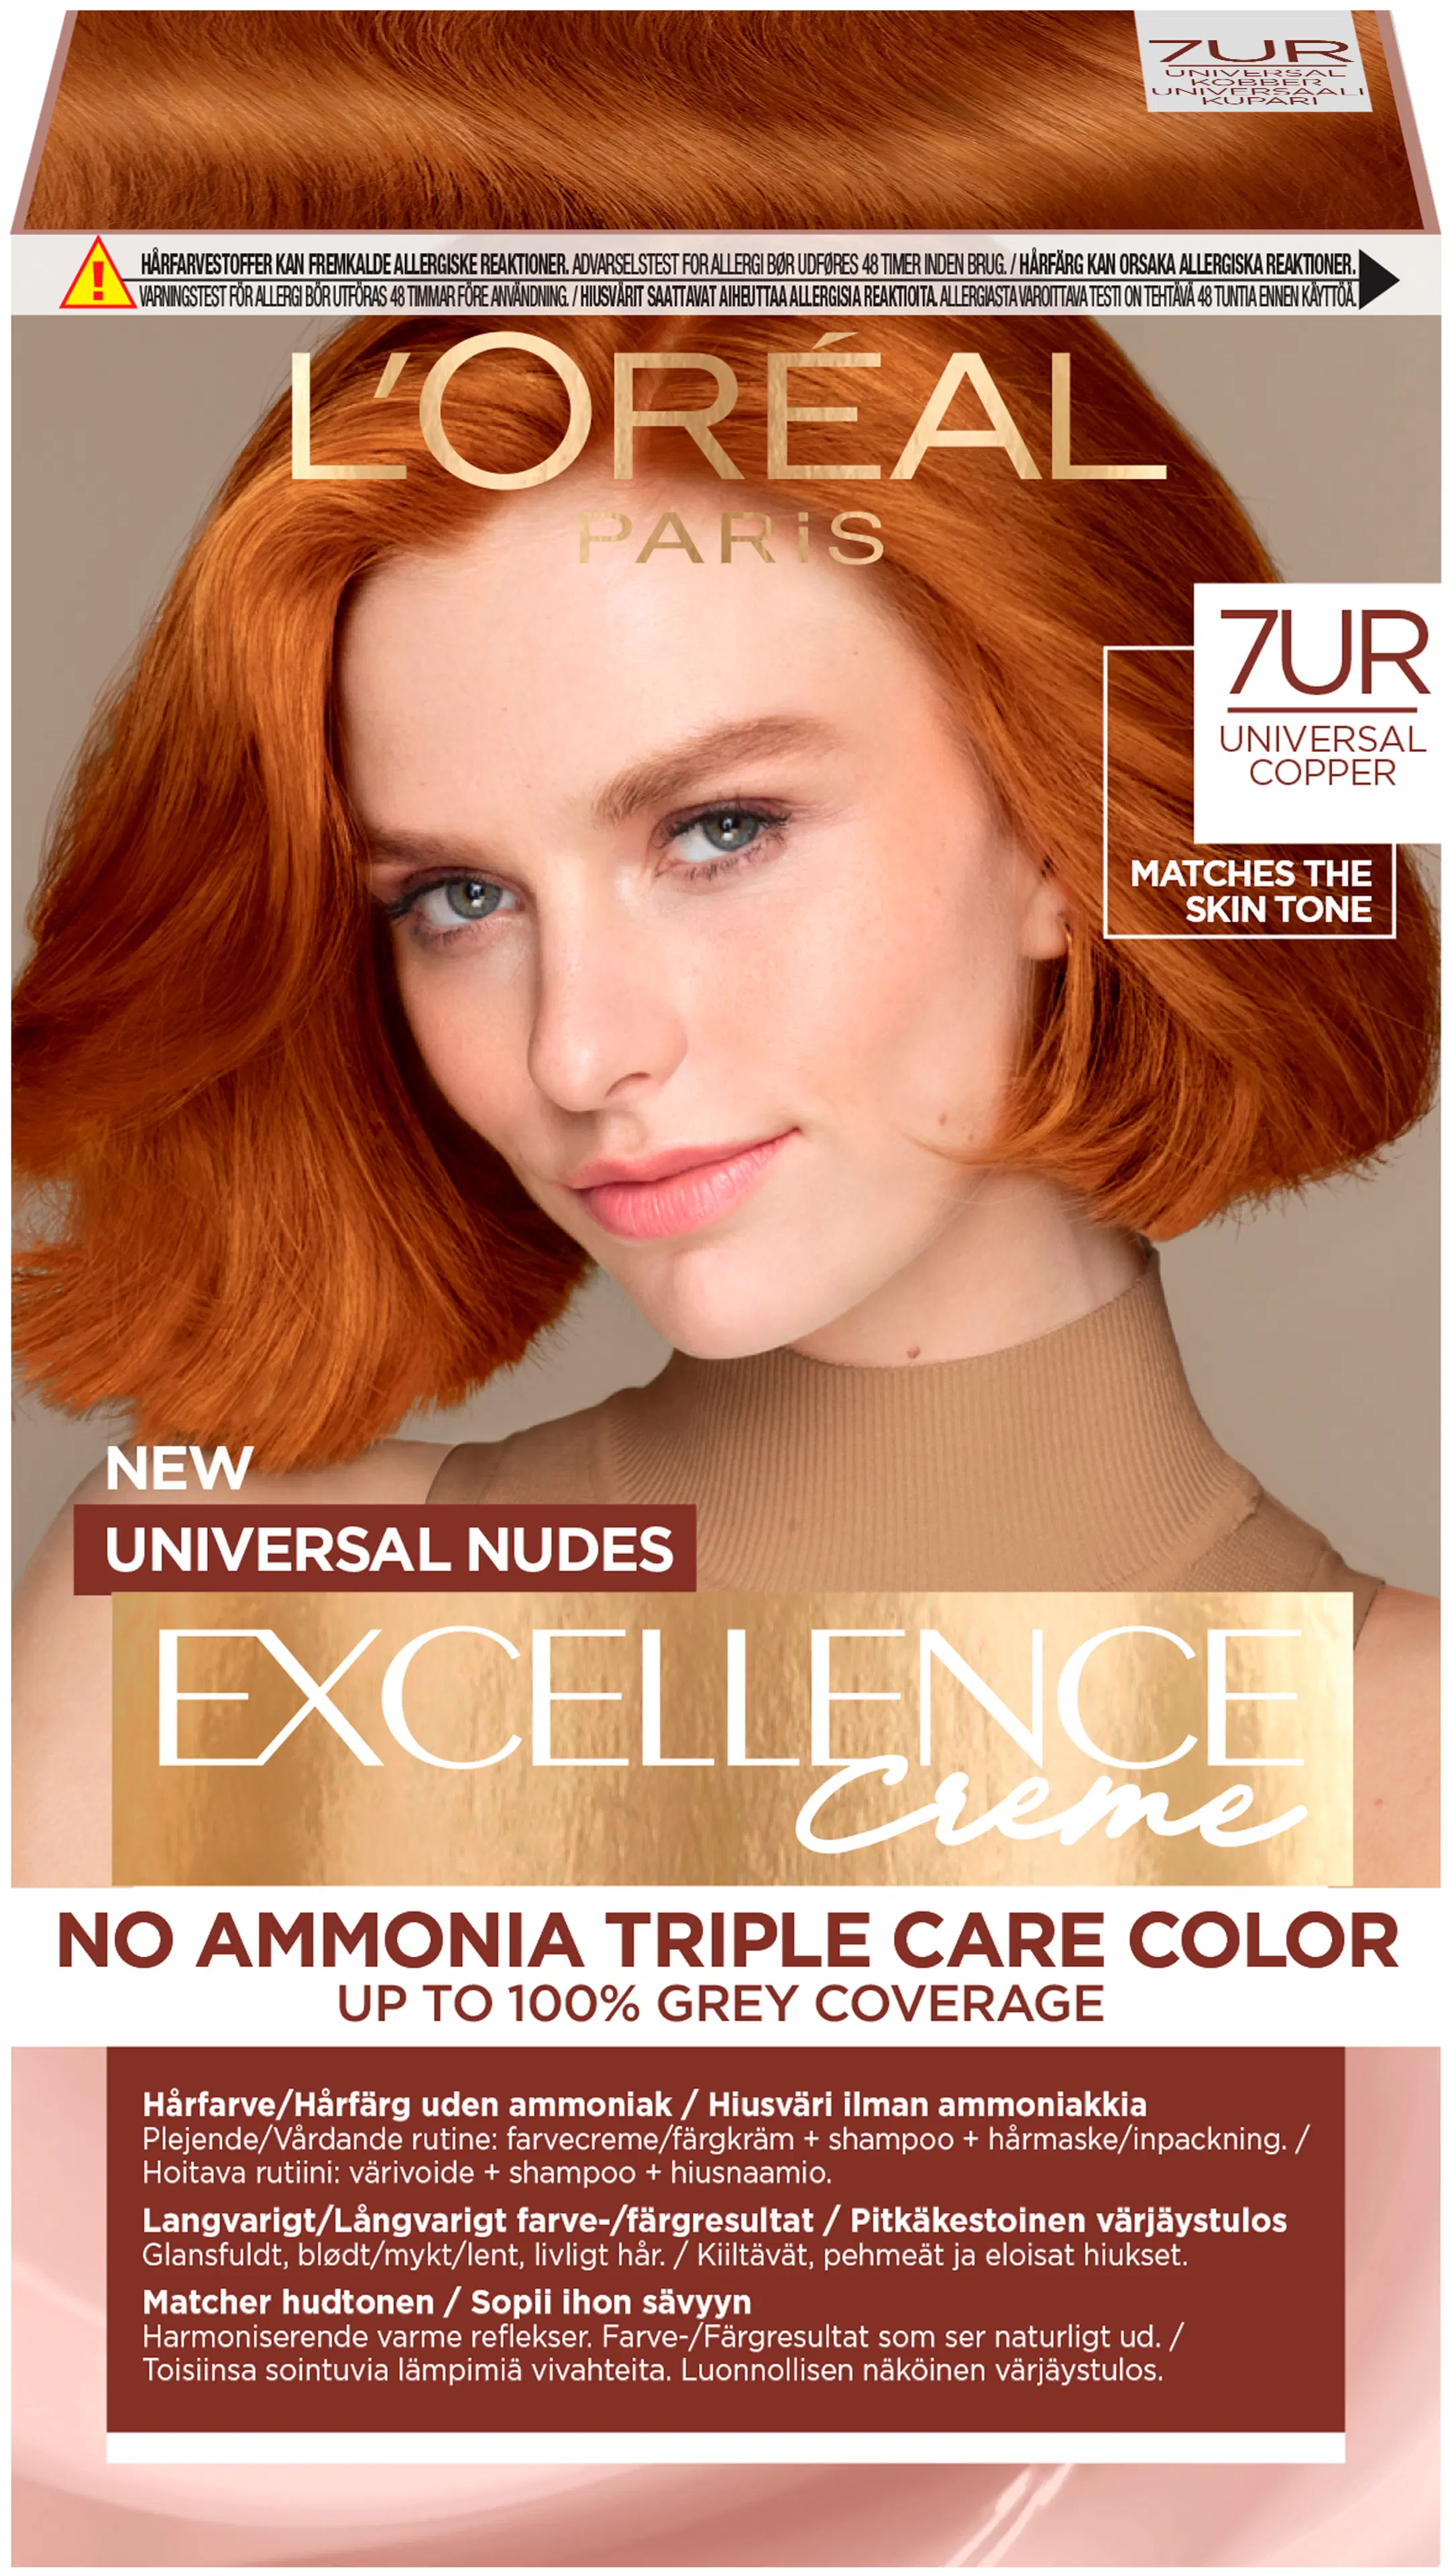 L'Oréal Paris Excellence Universal Nudes 7UC Copper kestoväri ilman ammoniakkia 1kpl